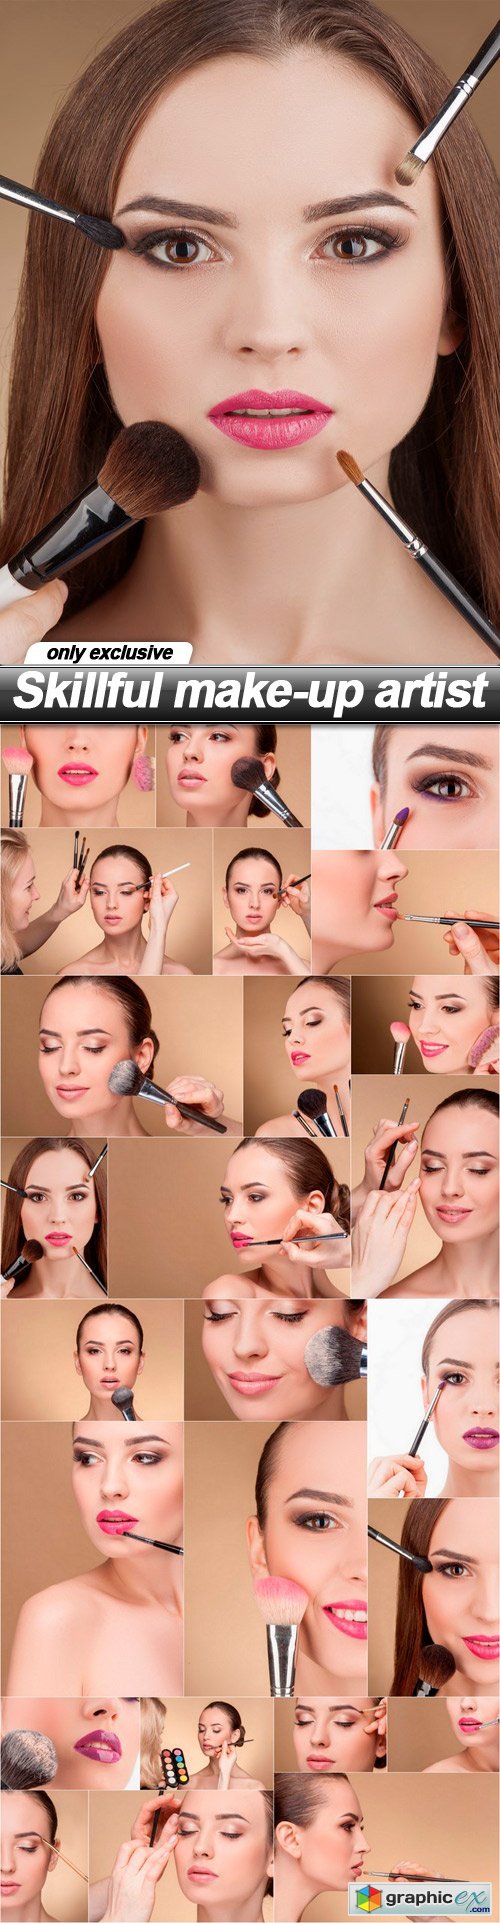 Skillful make-up artist - 25 UHQ JPEG